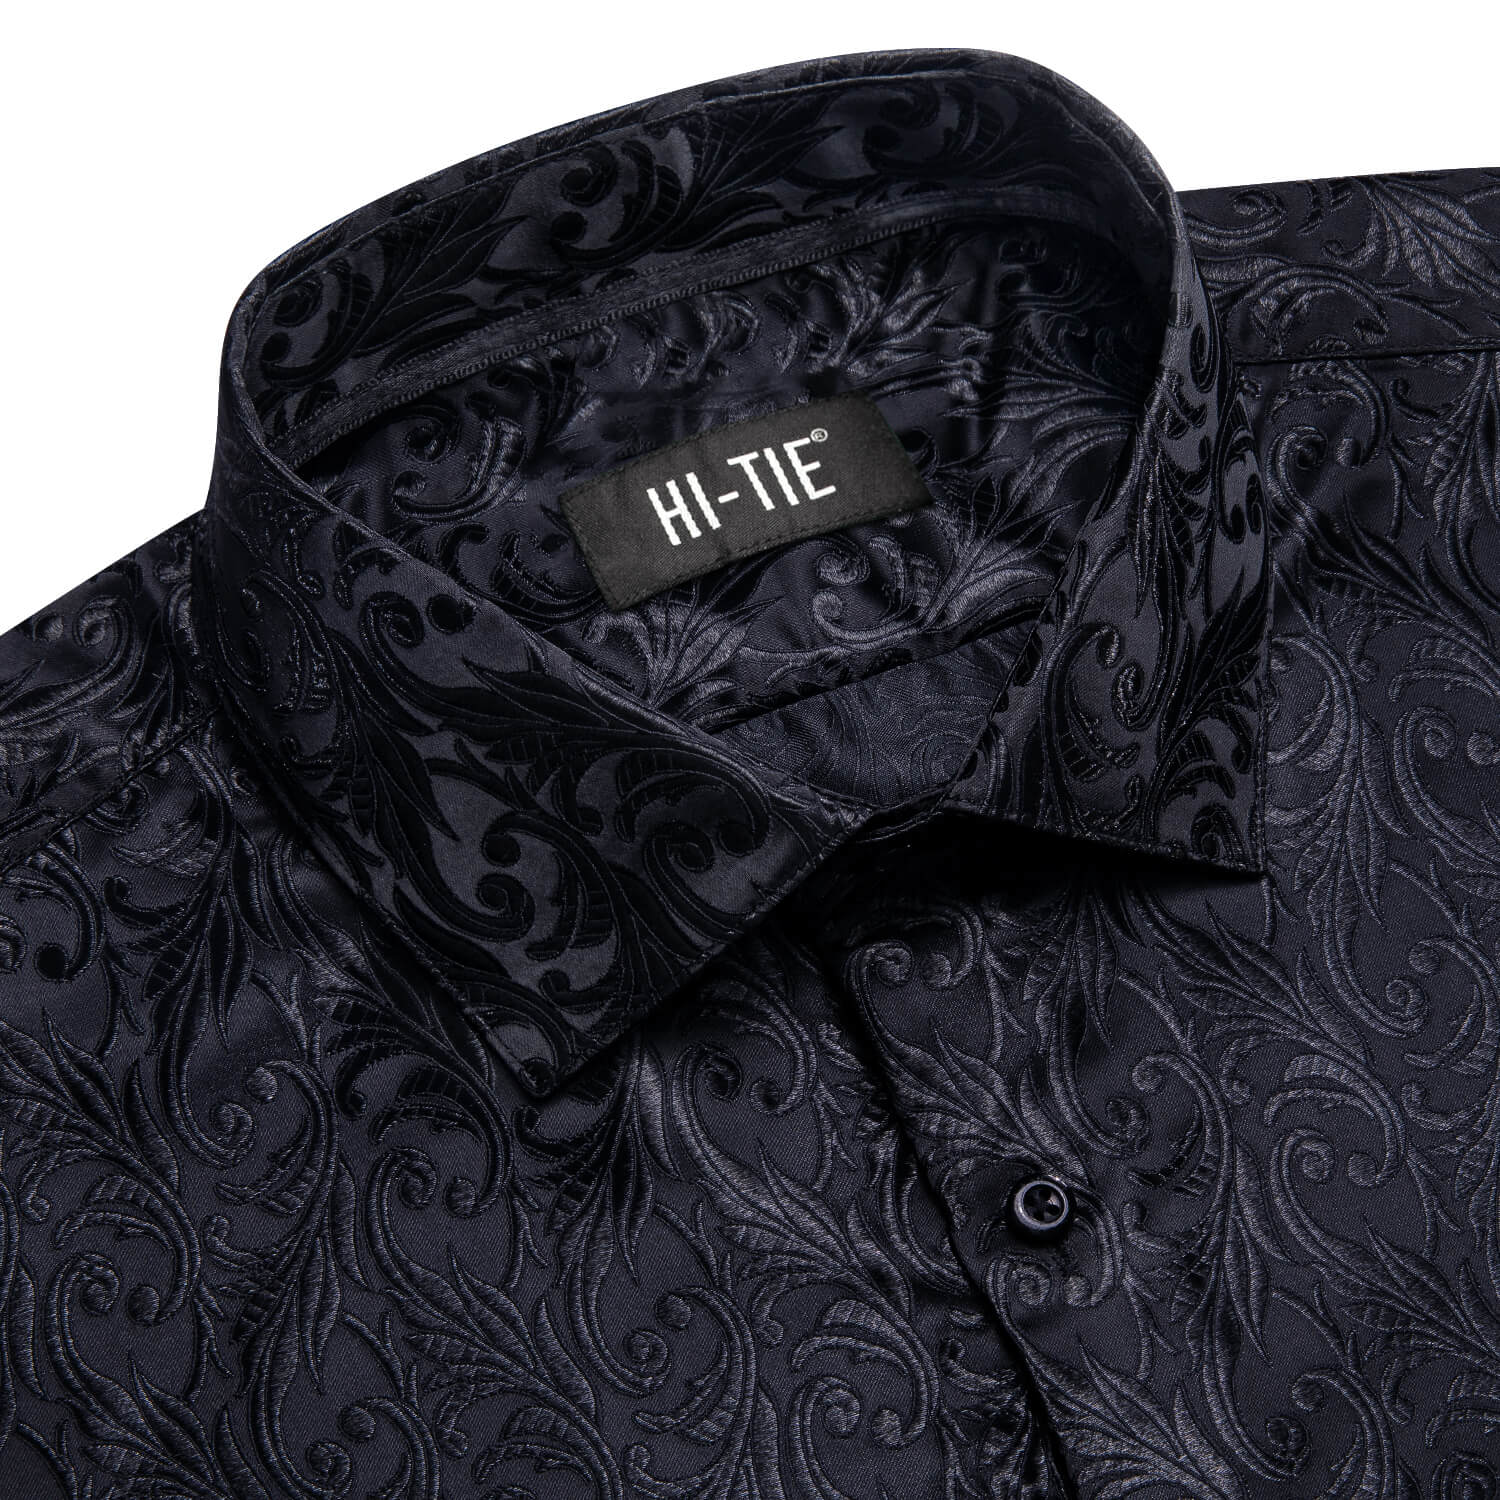 Hi-Tie Long Sleeve Shirt Black Jacquard Floral Silk Men's Shirt Formal